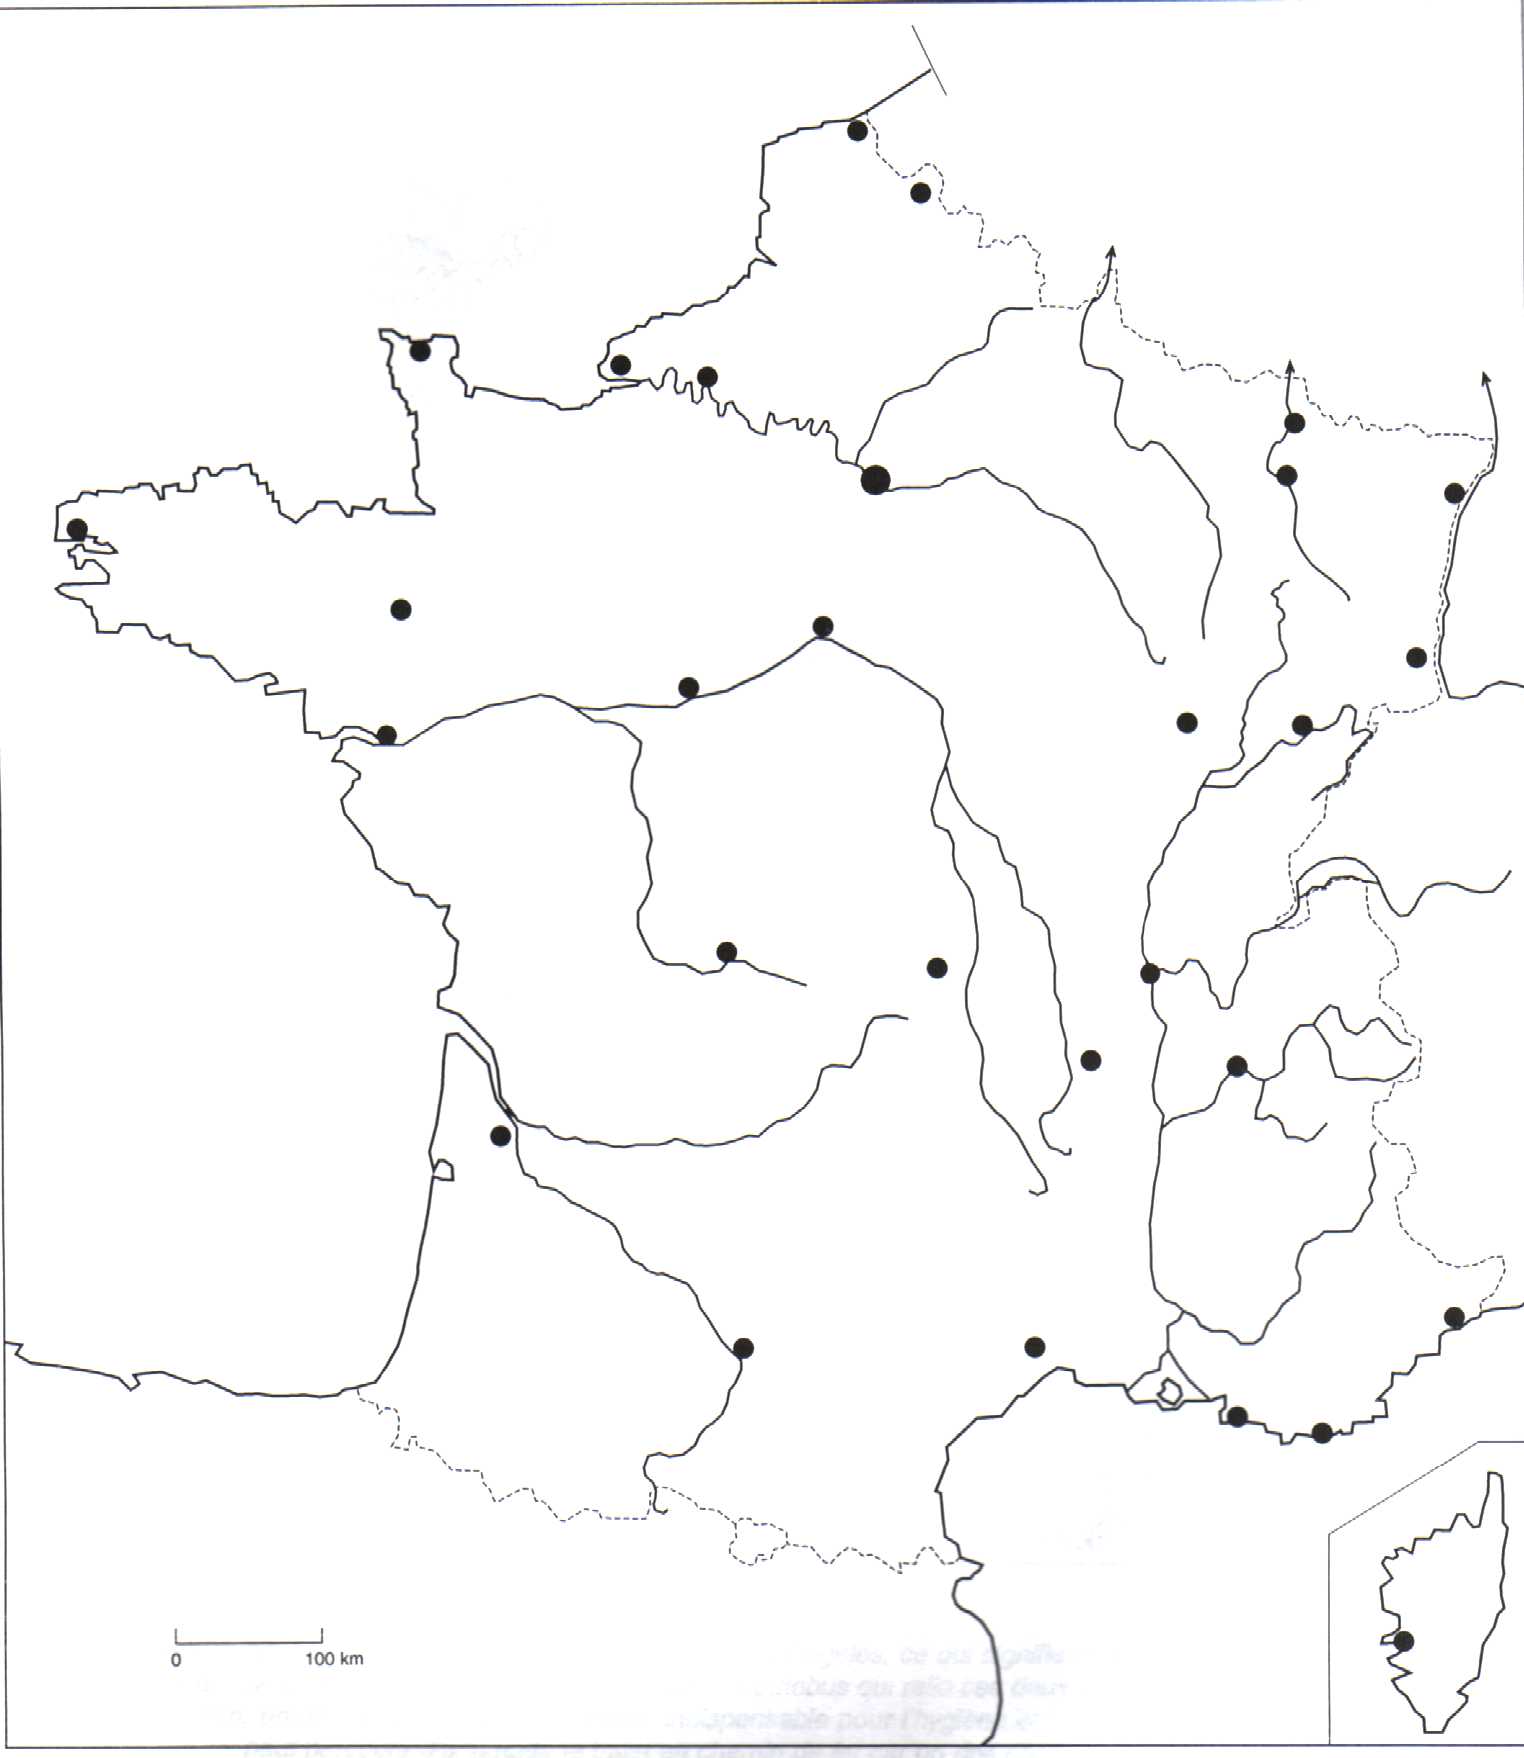 Cartograf.fr : Pays : Cartes de France regions et departements